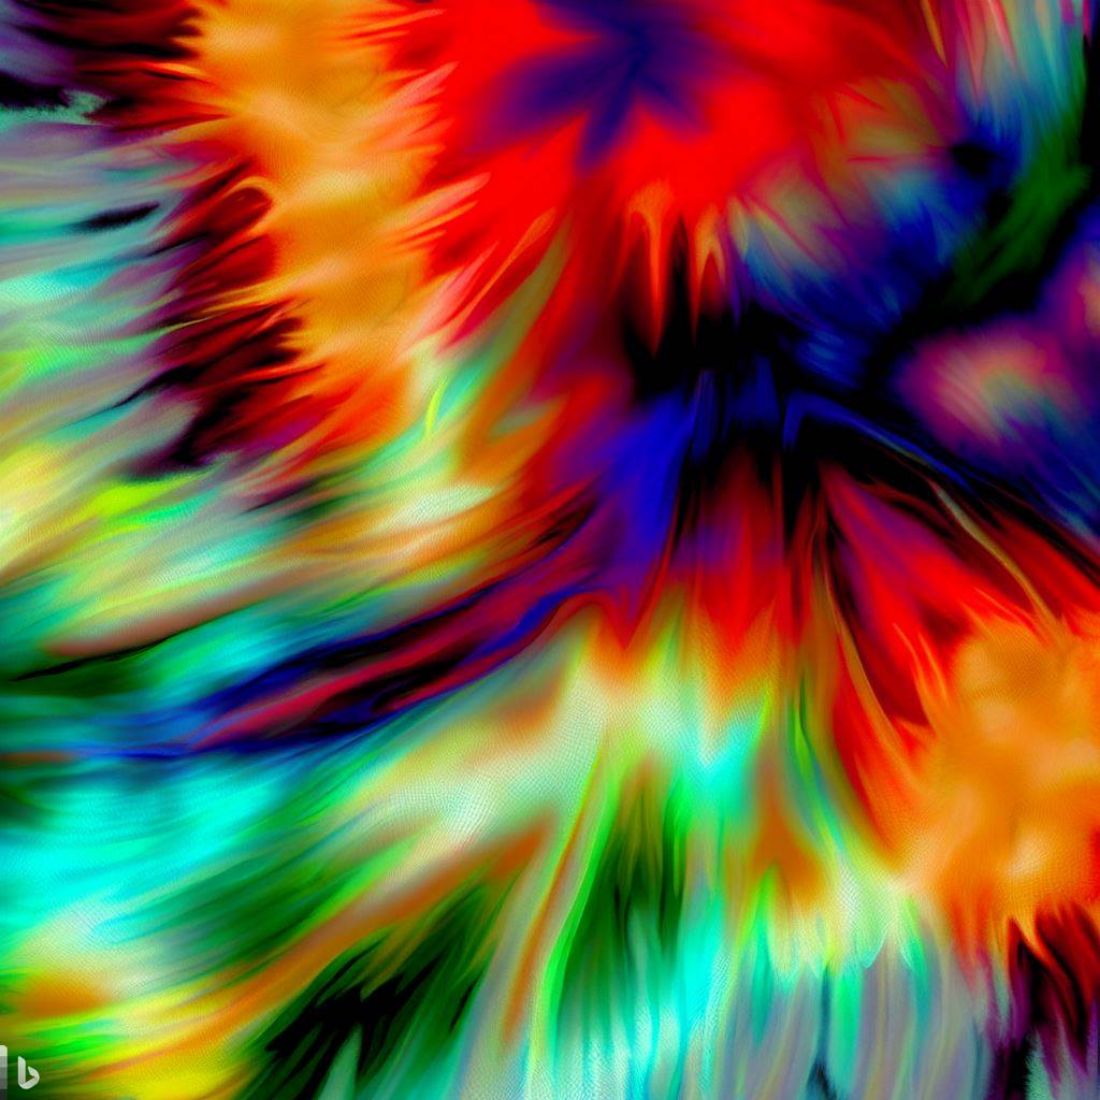 4 Tie dye psychedelic background images in varoius colour combinations -  MasterBundles